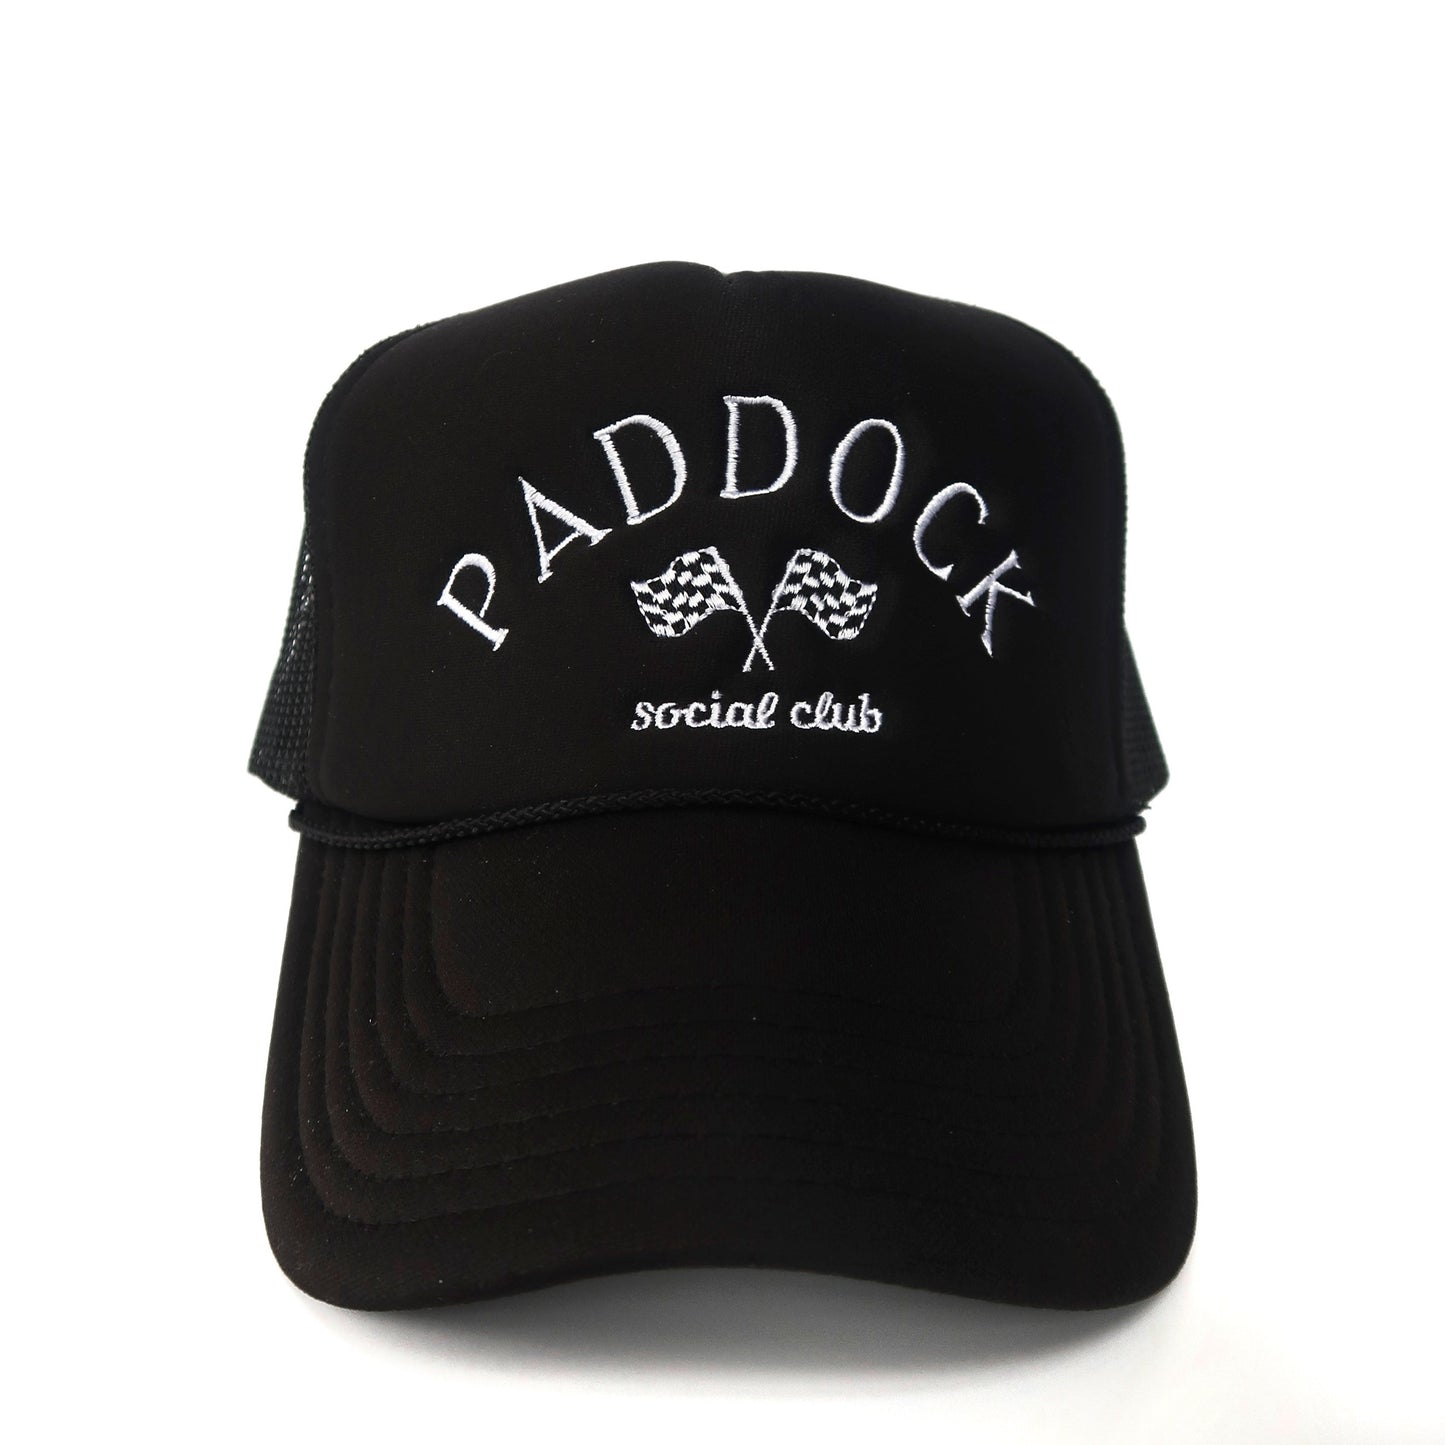 Paddock Social Club Original Trucker Hat - Black